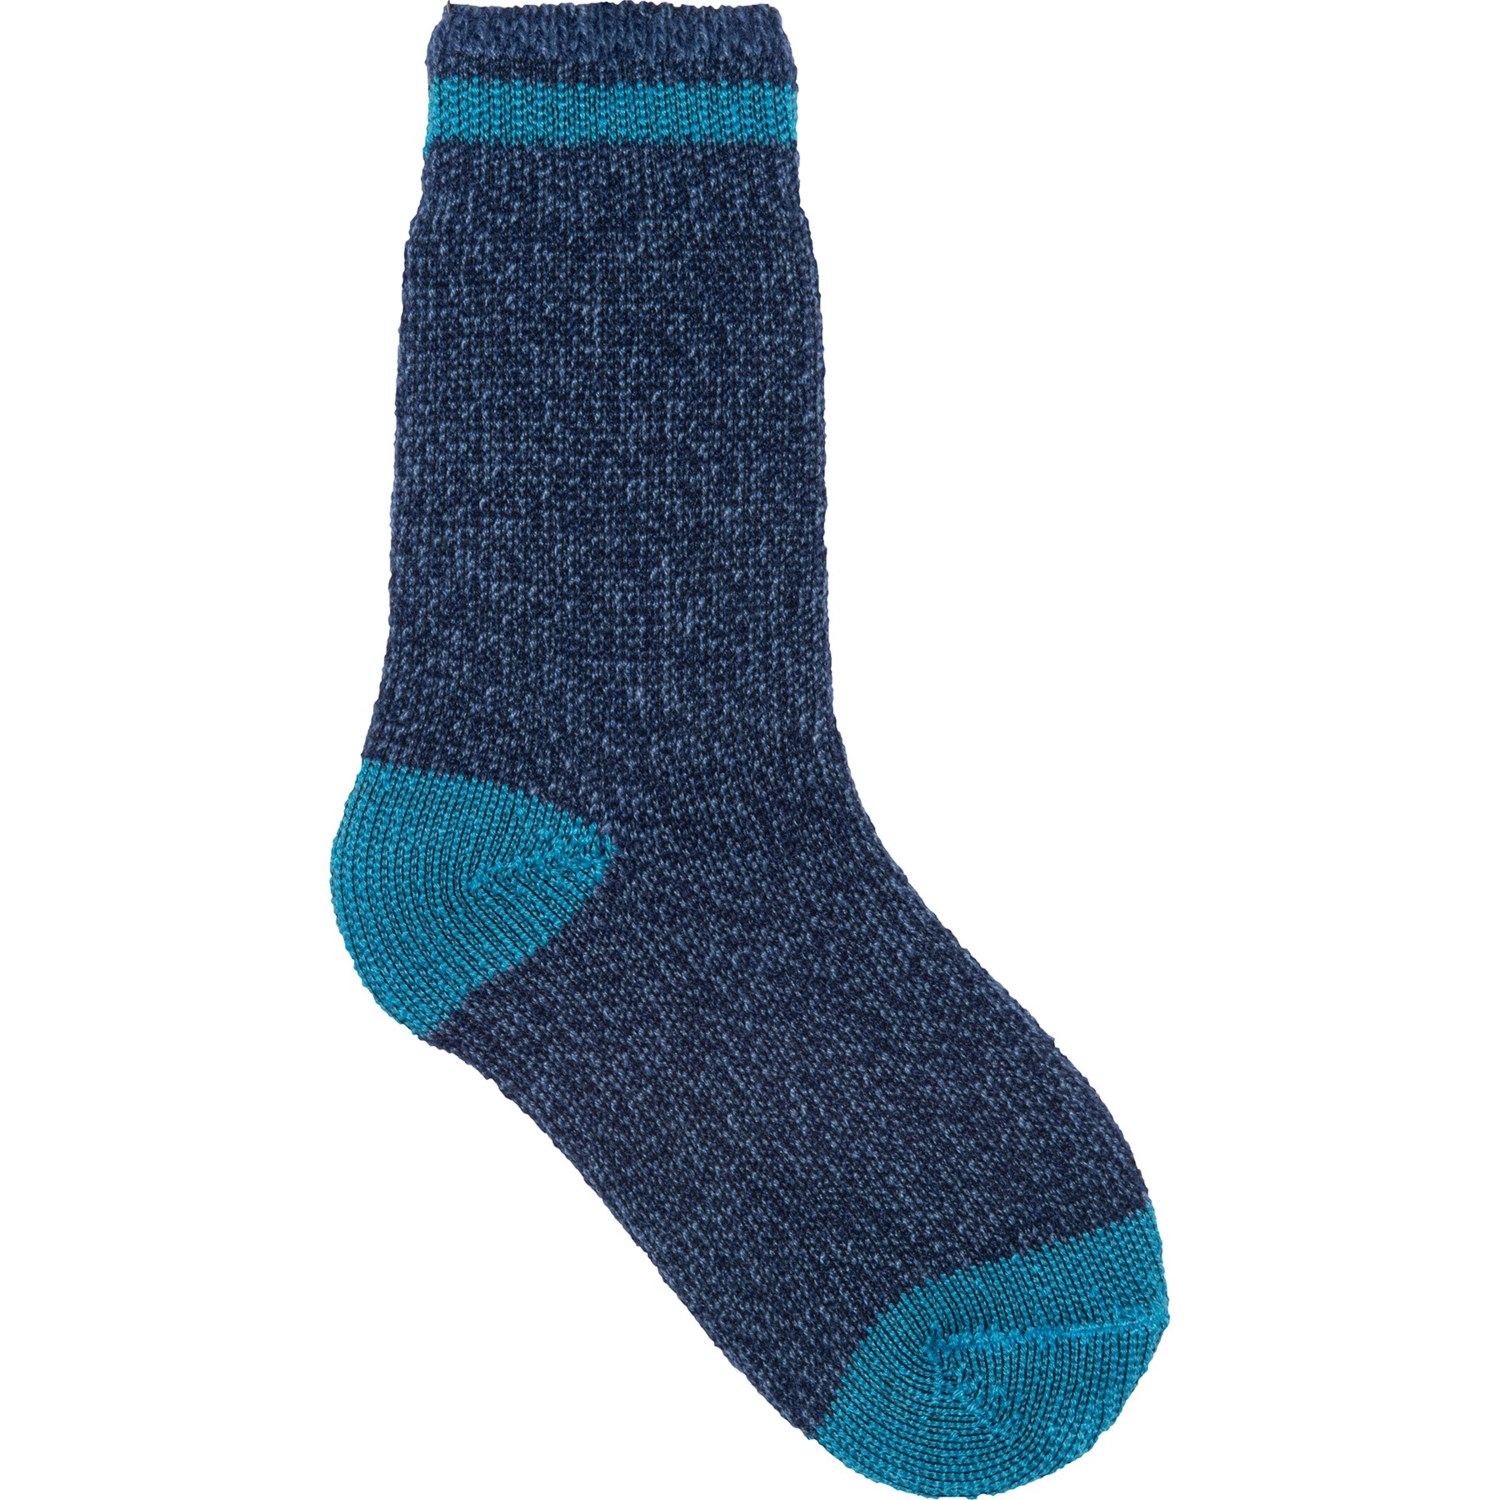 Watson's Heather Denim Teal Heat Socks (For Boys) - Save 40%